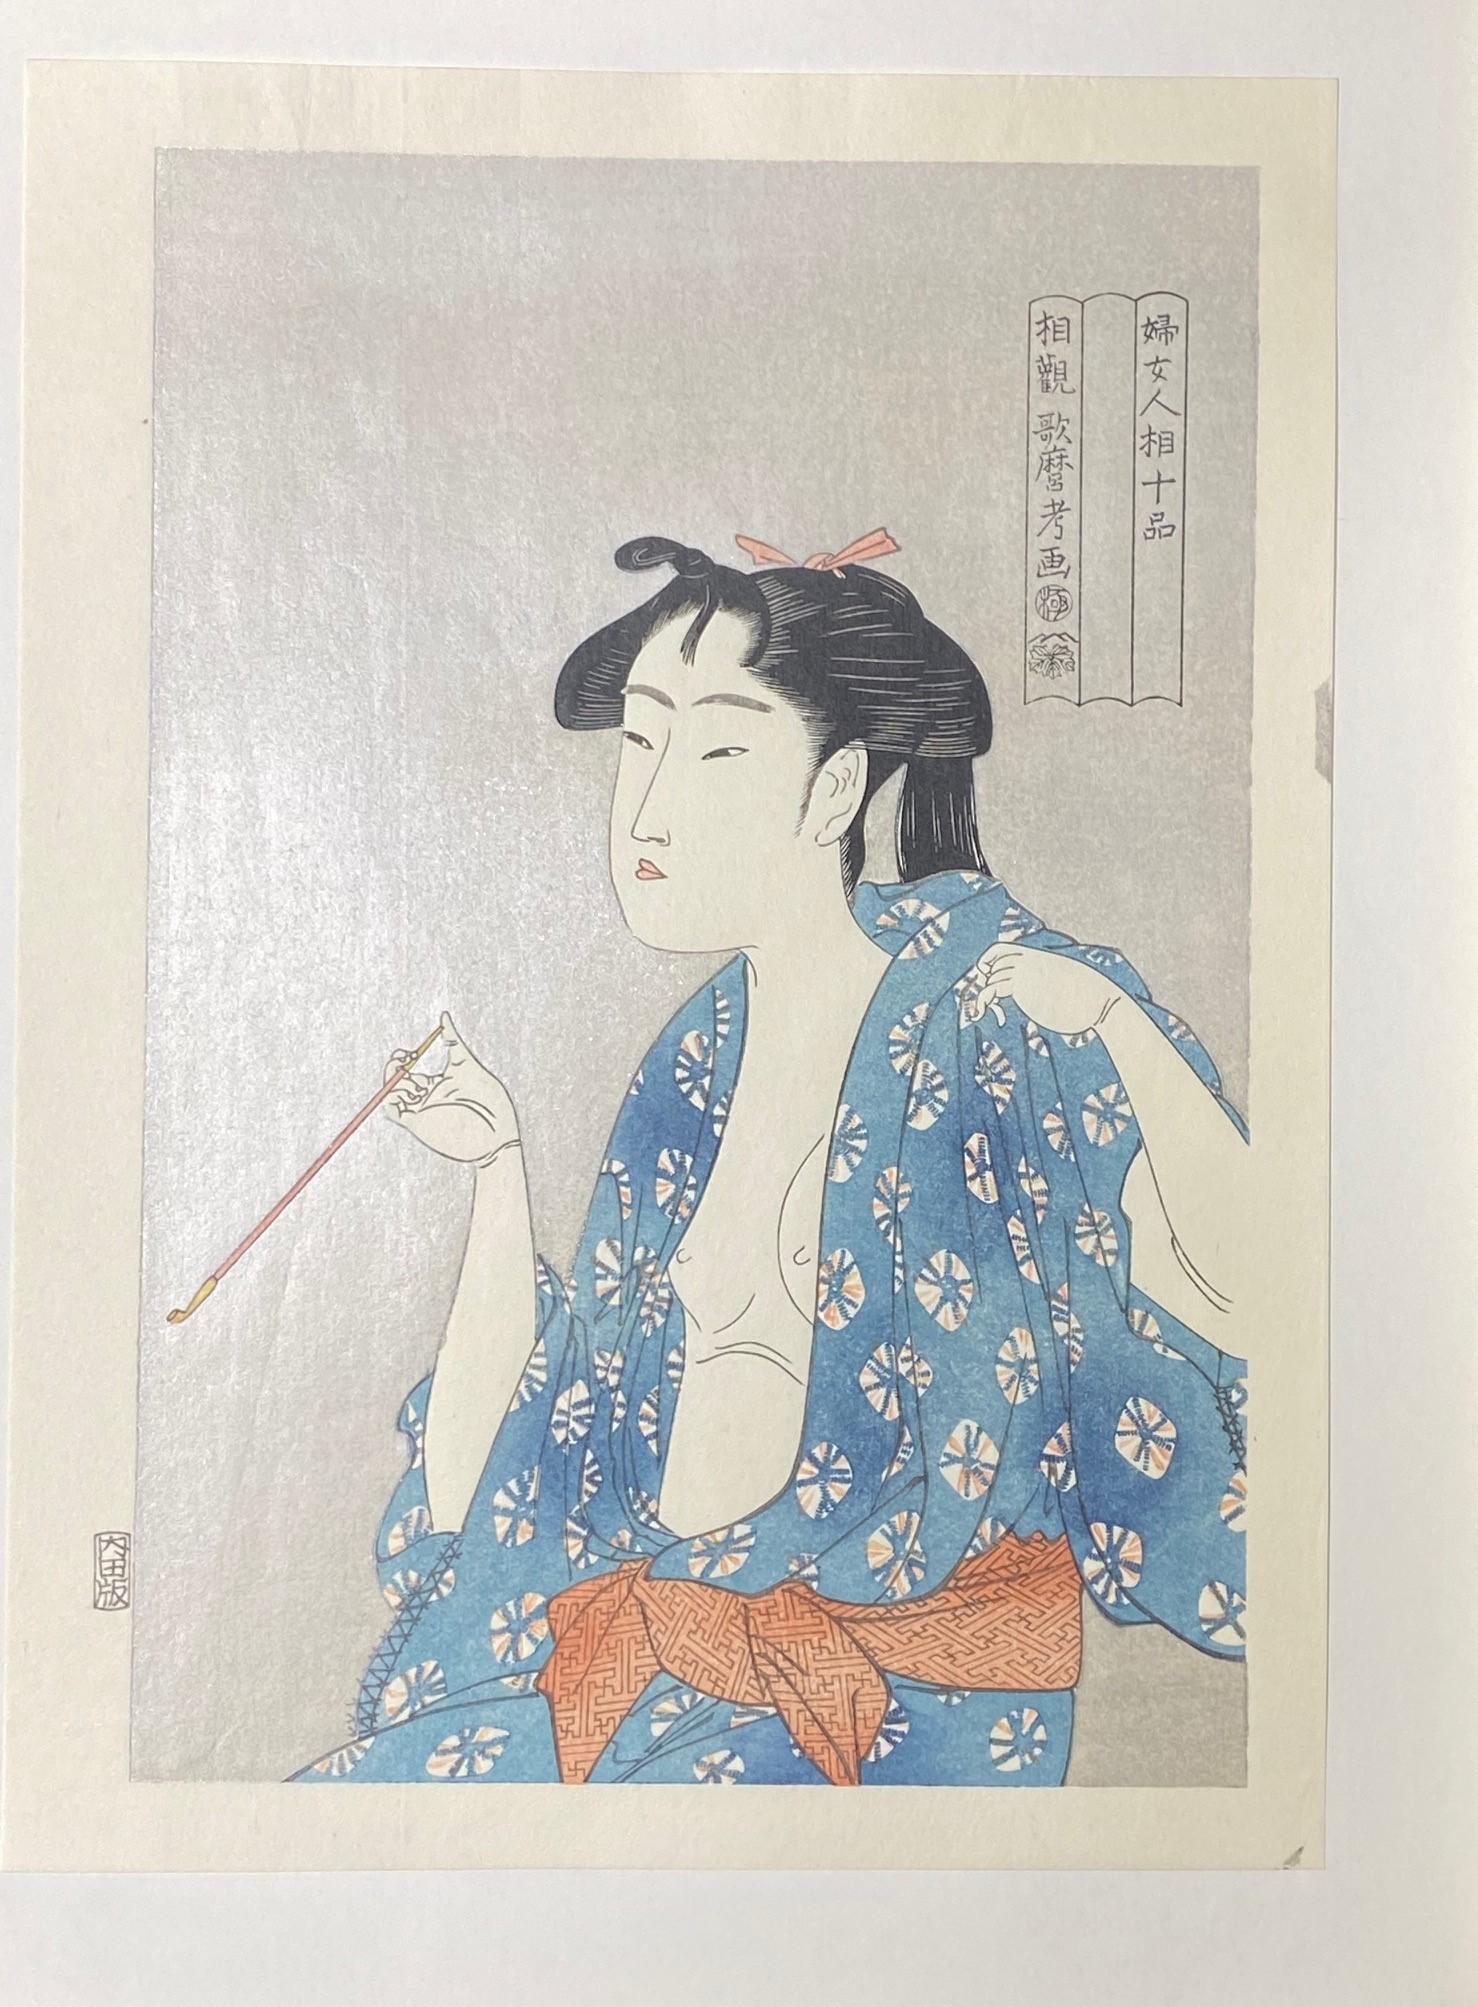 Kitagawa Utamaro Japanese Woodblock Print Edo Semi-Nude Woman Smoking Opium Pipe For Sale 6